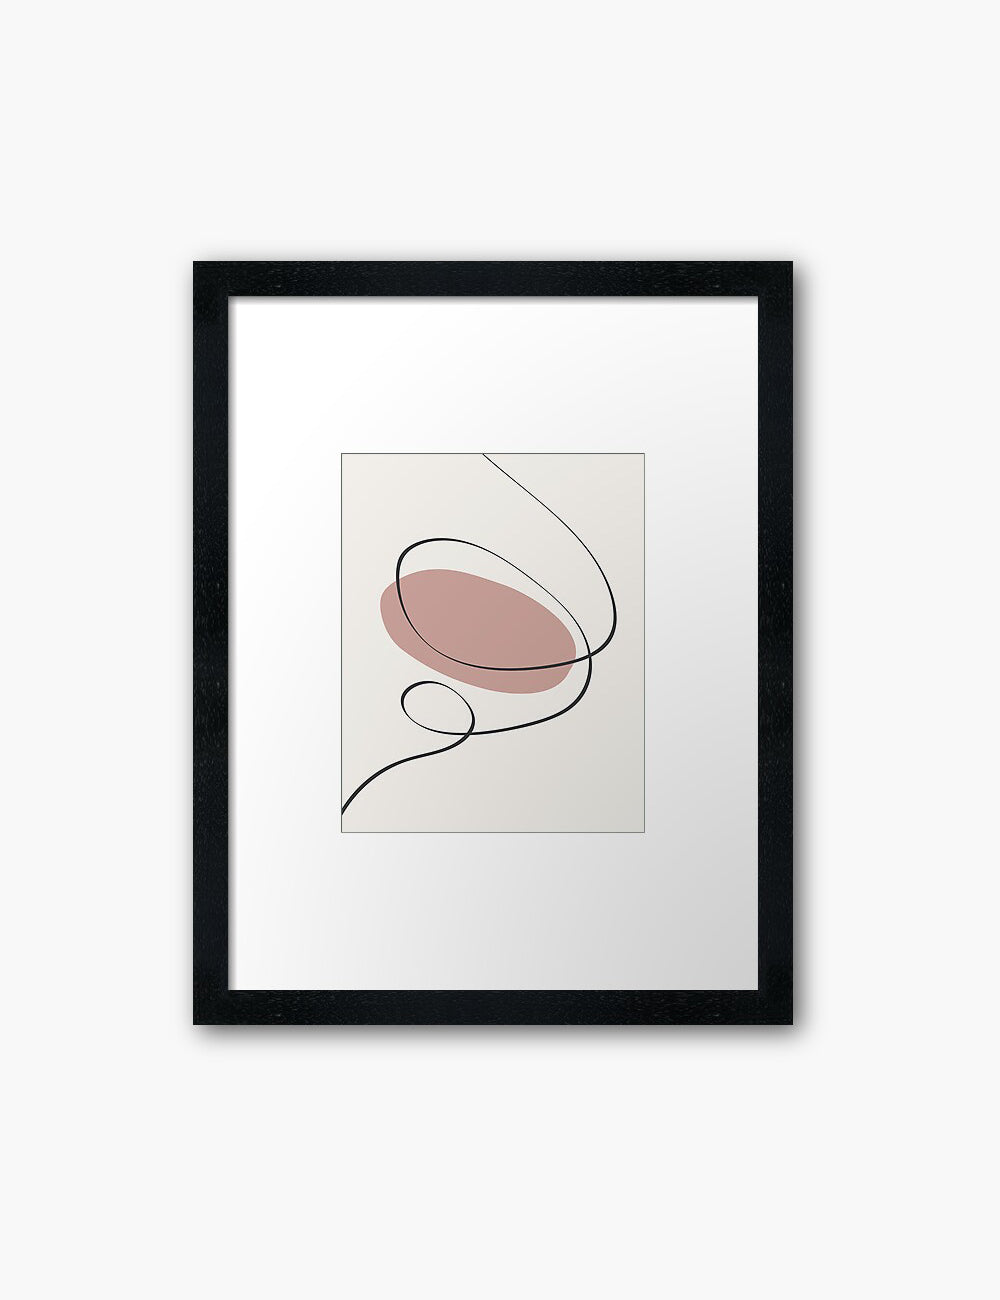 MINIMAL LINE ART. Abstract Shapes. Boho Aesthetic. Blush. Rose. Pale Red. Beige. Black. Printable Wall Art Illustration. - PAPER MOON Art & Design